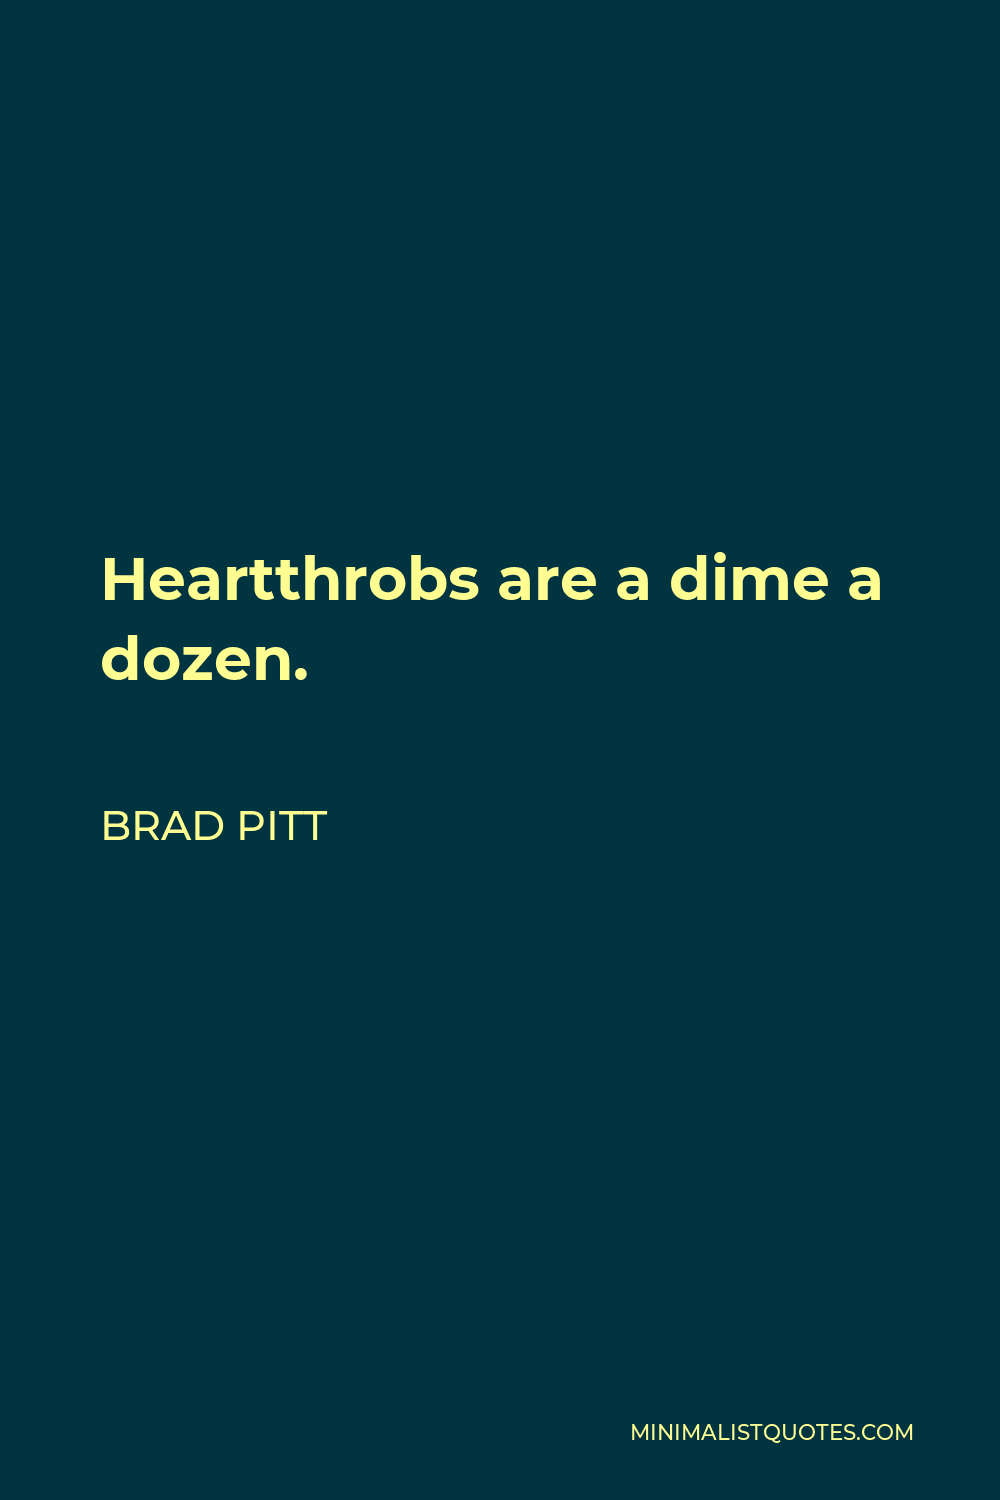 Brad Pitt Quote - Heartthrobs are a dime a dozen.